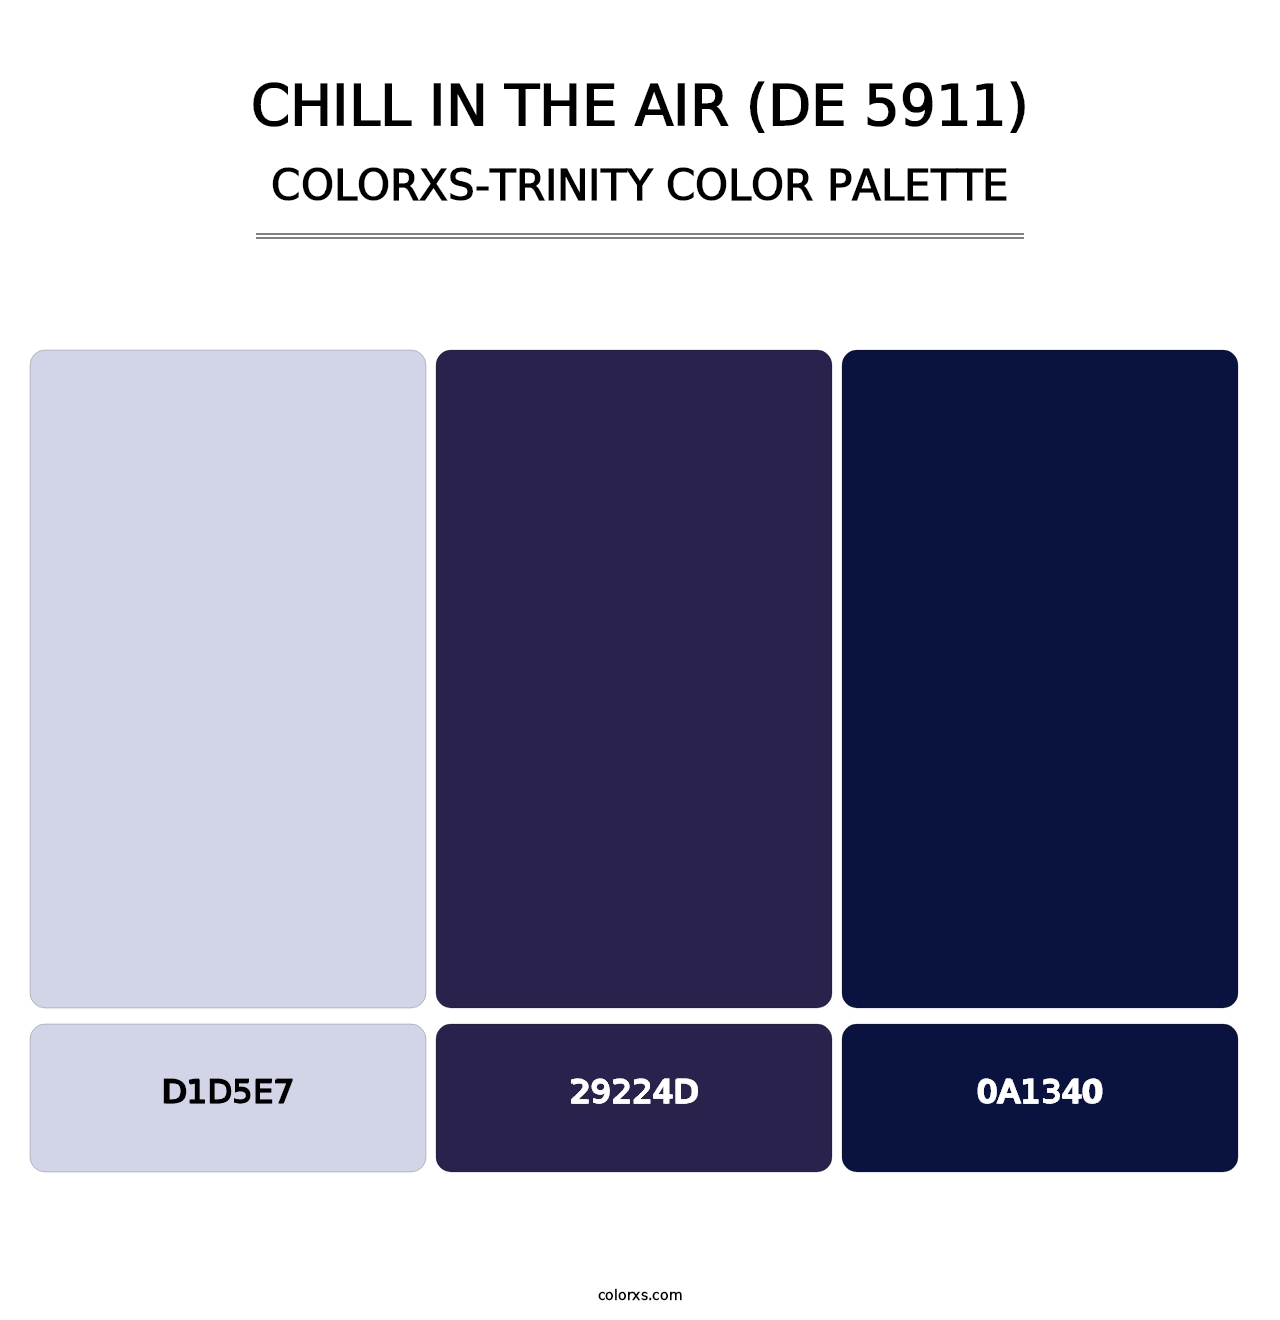 Chill in the Air (DE 5911) - Colorxs Trinity Palette